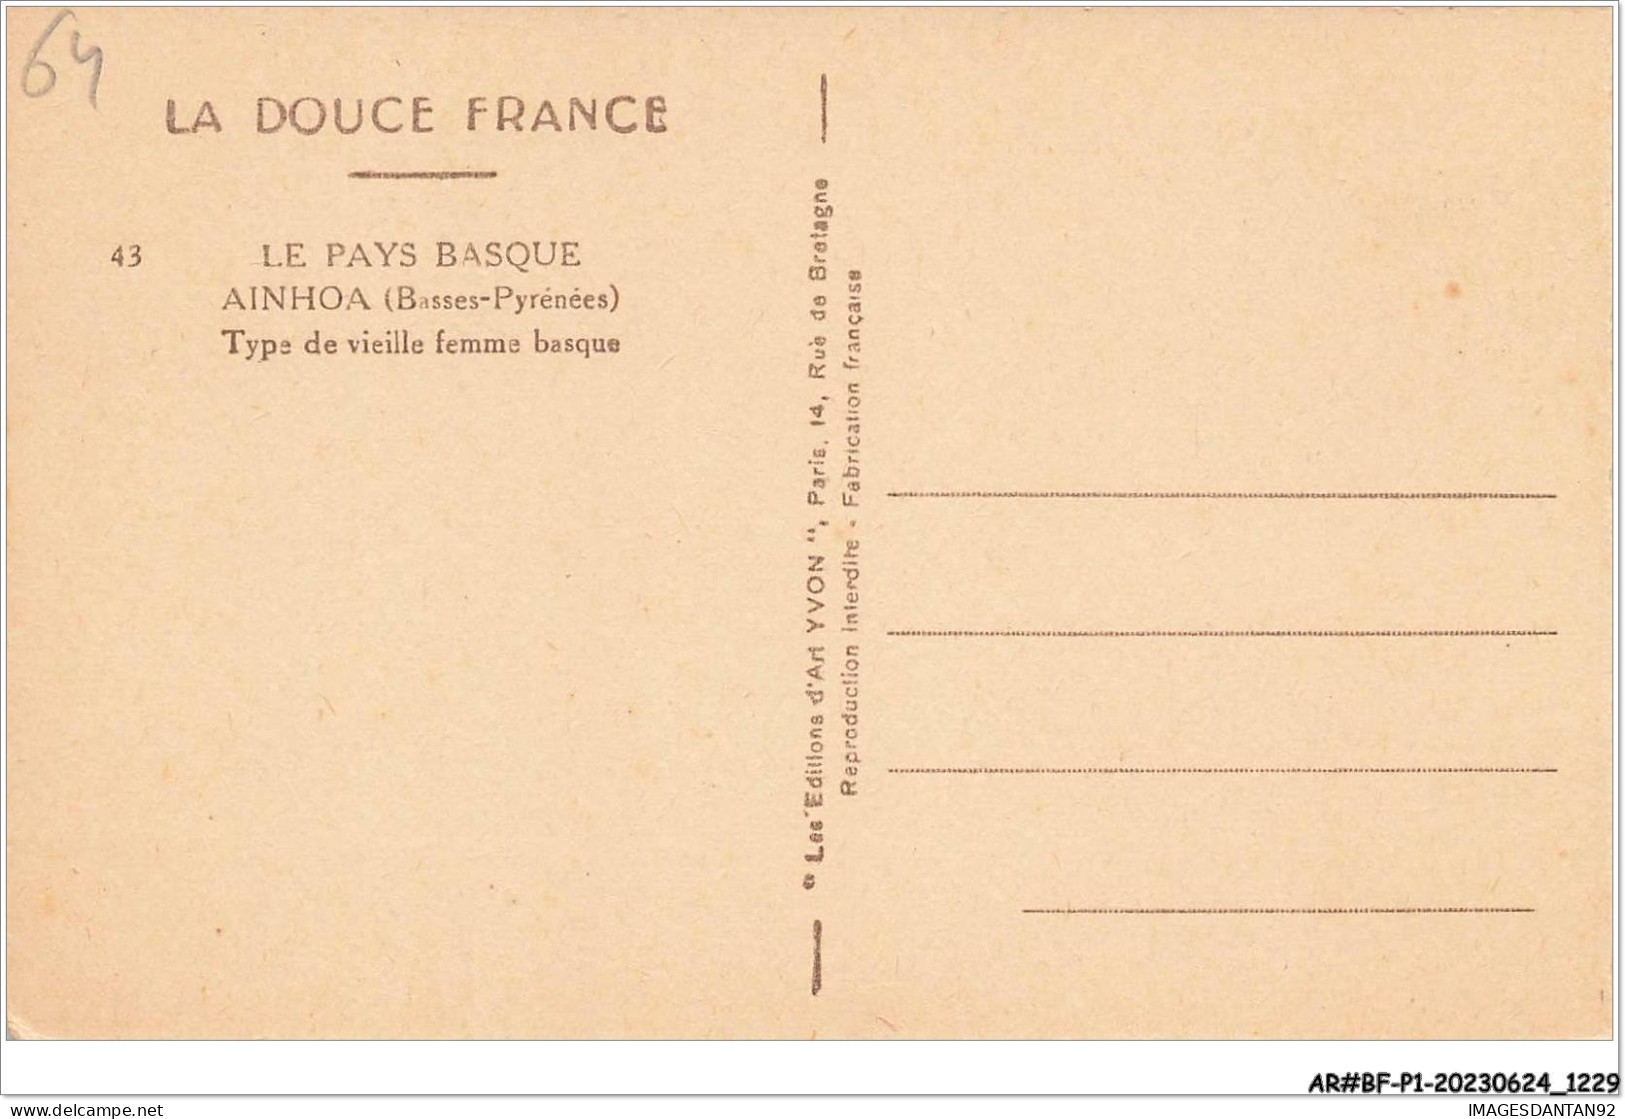 AR#BFP1-64-0615 - La Douce France - AINHOA - Type De Vieille Femme Basque - Ainhoa